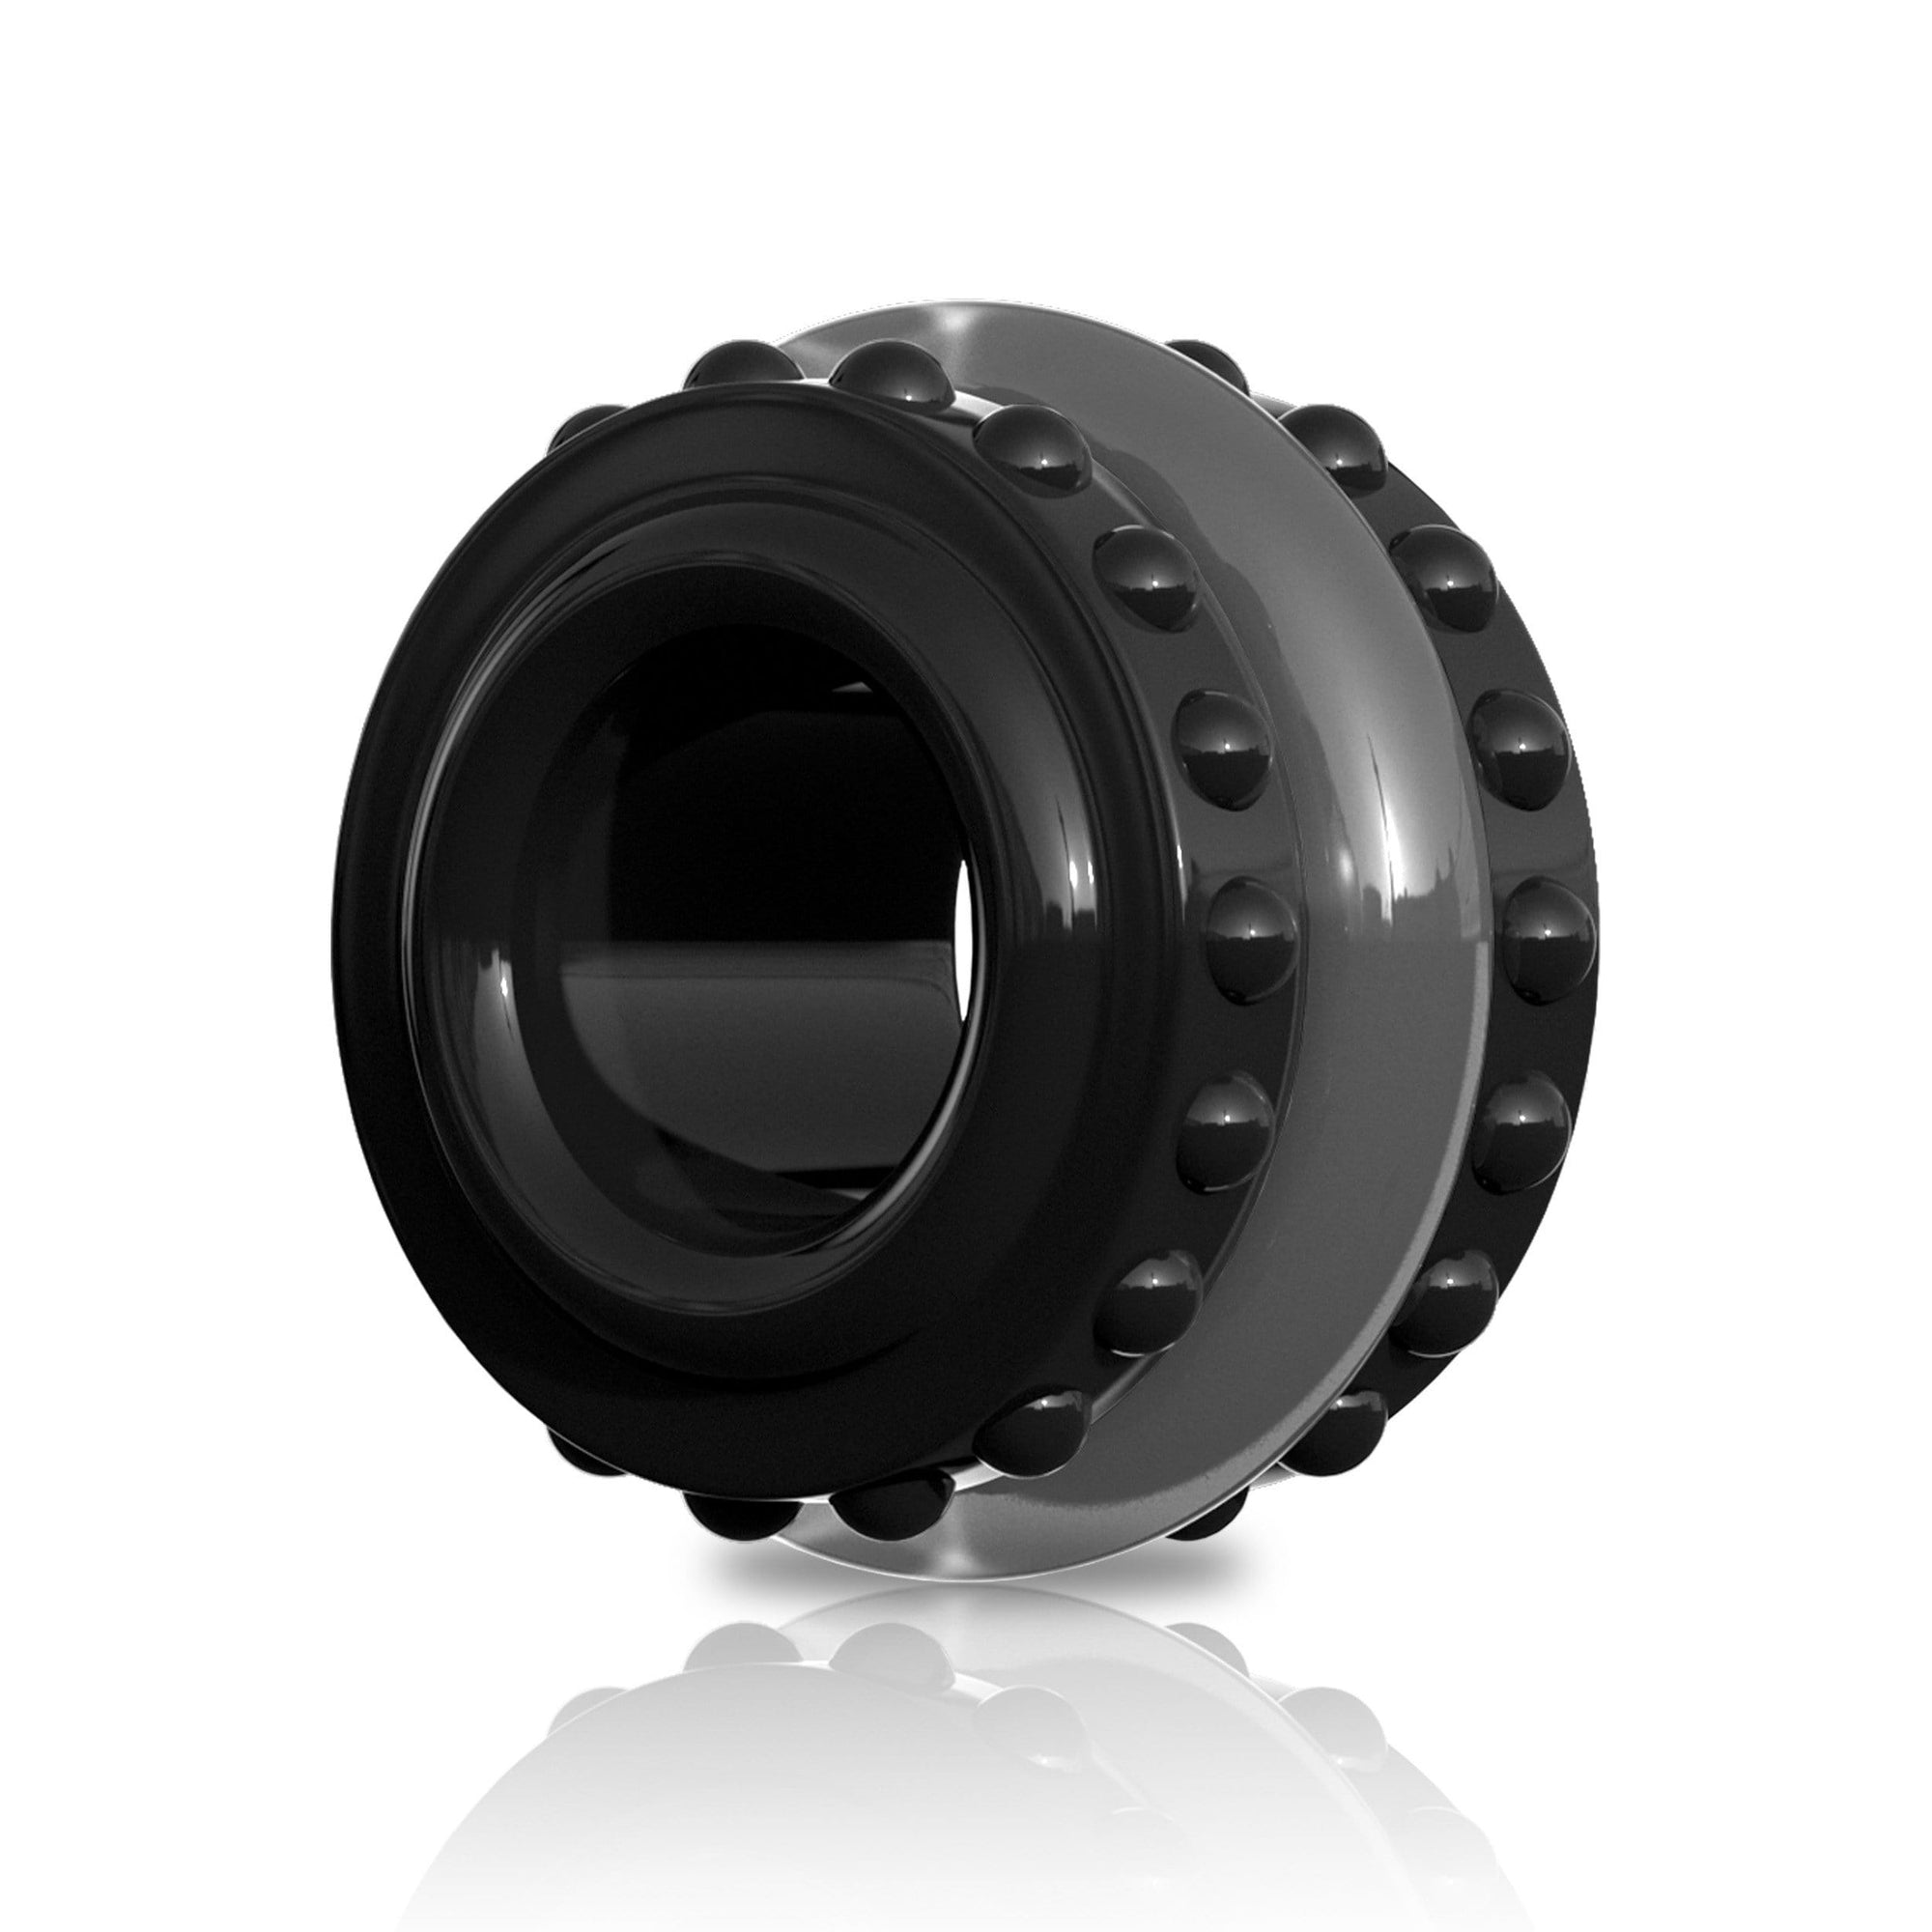 Sir Richards - Control Pro Performance Advanced C-Ring (Black) -  Cock Ring (Non Vibration)  Durio.sg